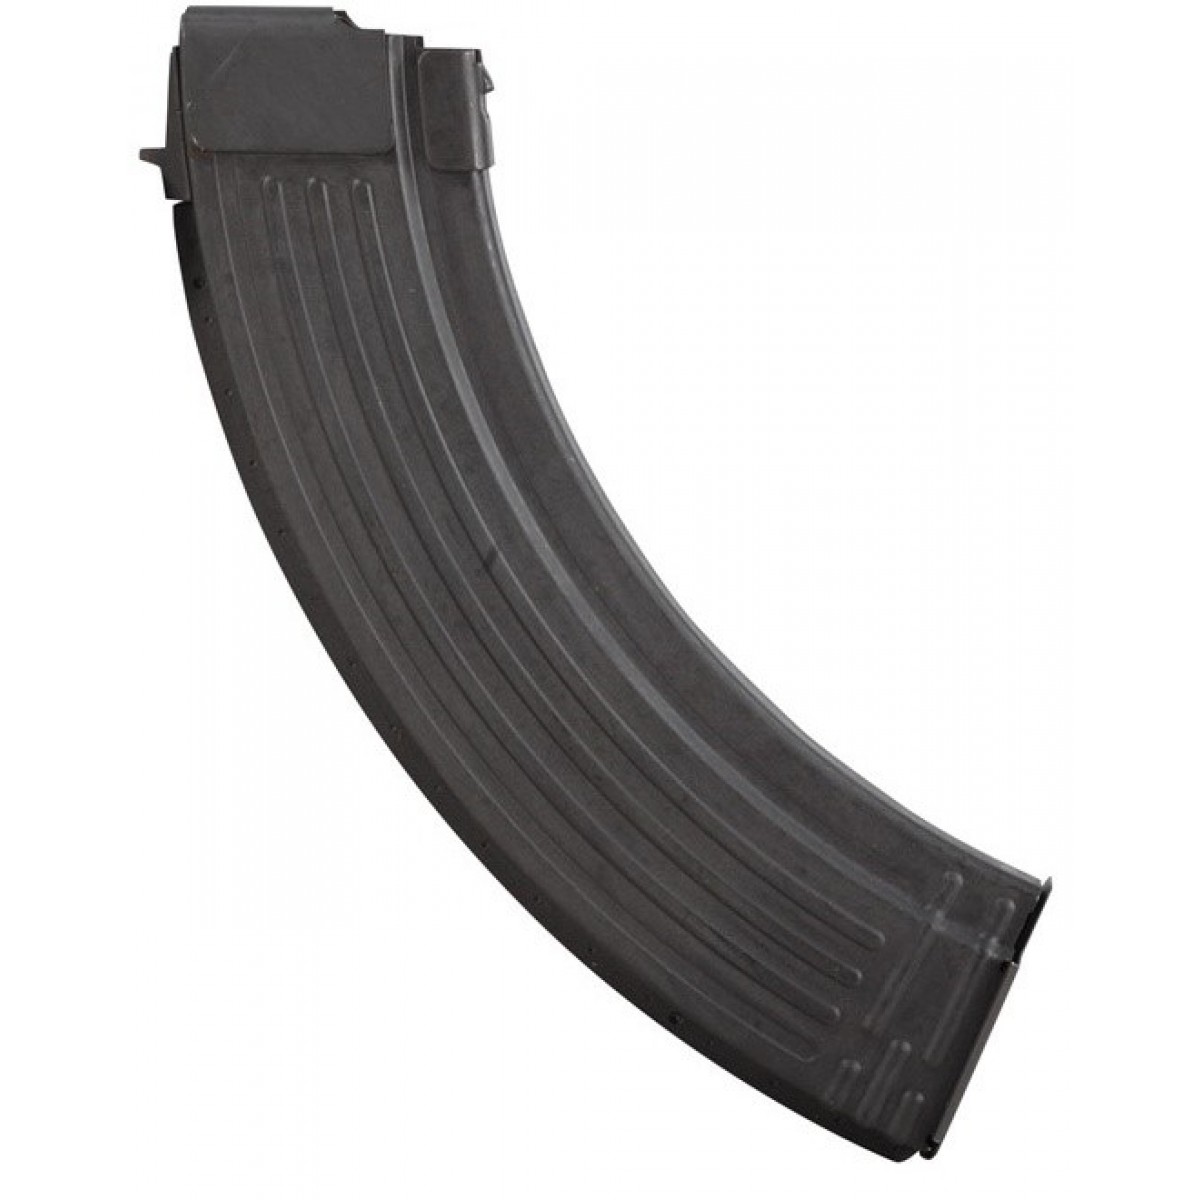 KCI 7.62x39mm Steel Magazine AK-47 40 Rounder KCIAK4740 (Black) Product Image